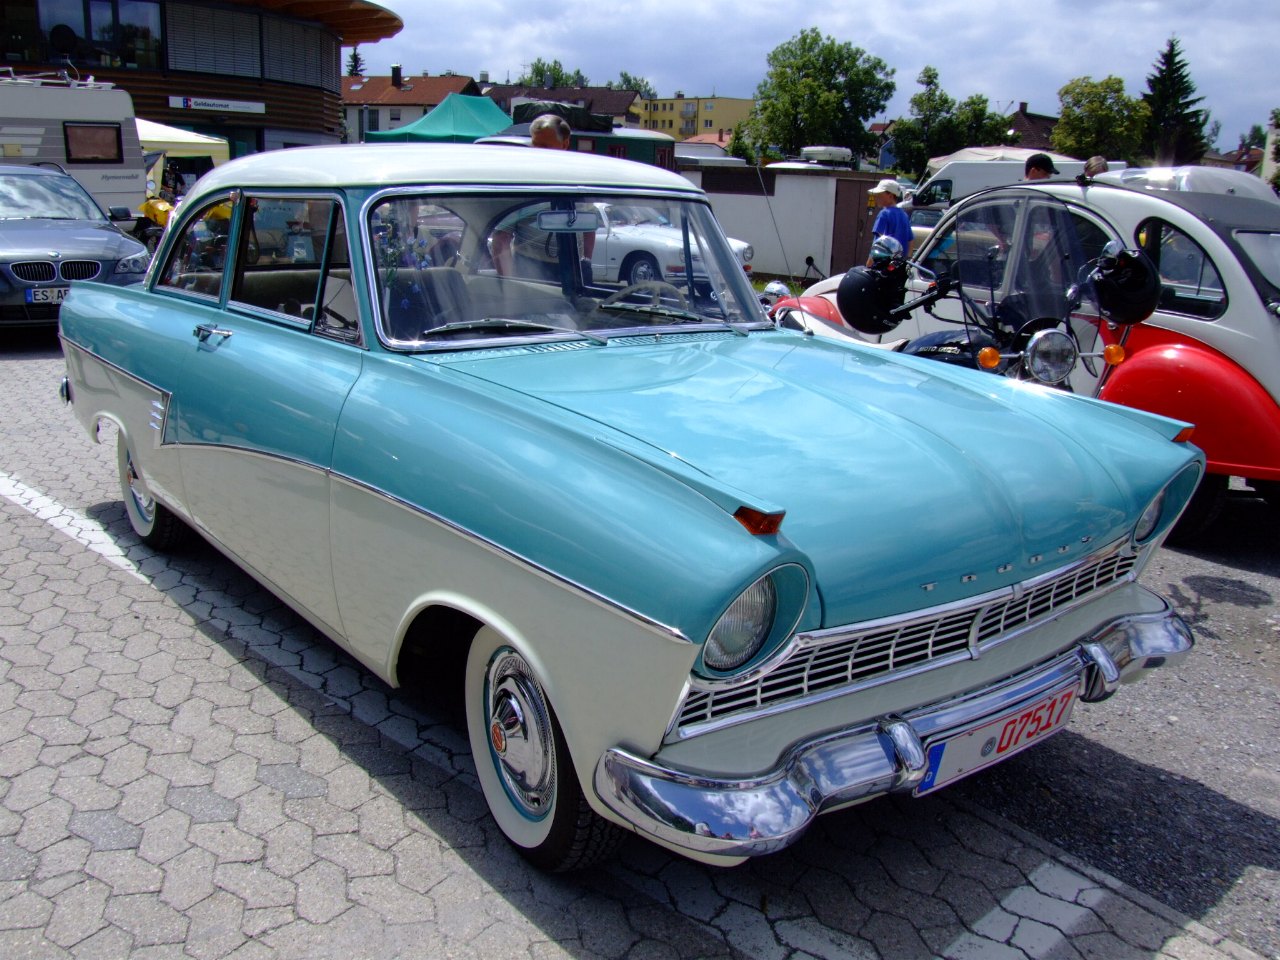 60s pontiac station wagon ford